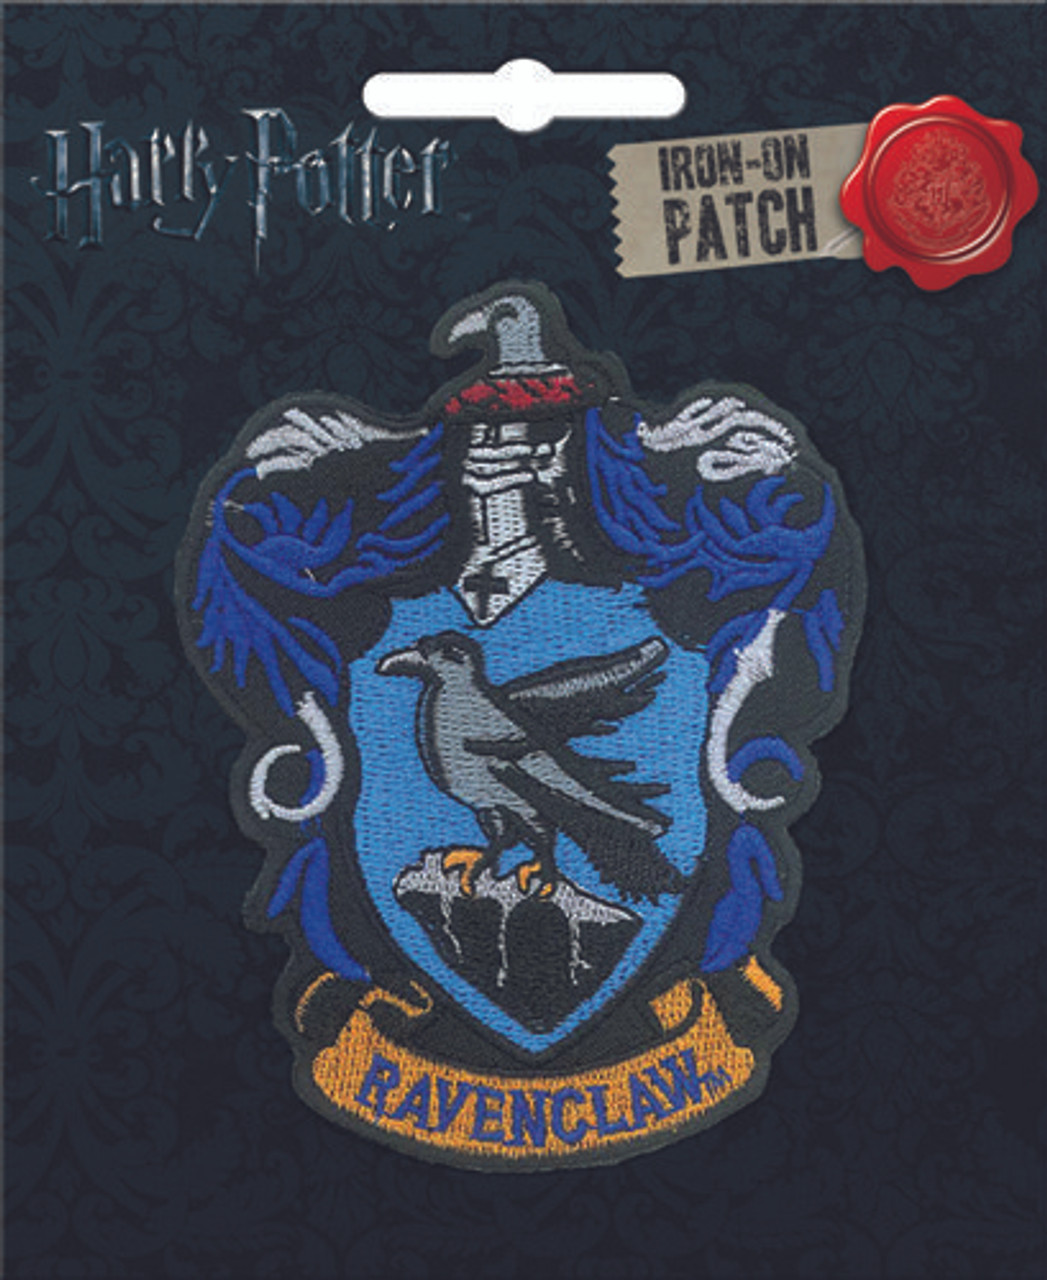 Ravenclaw Patch - Harry Potter 